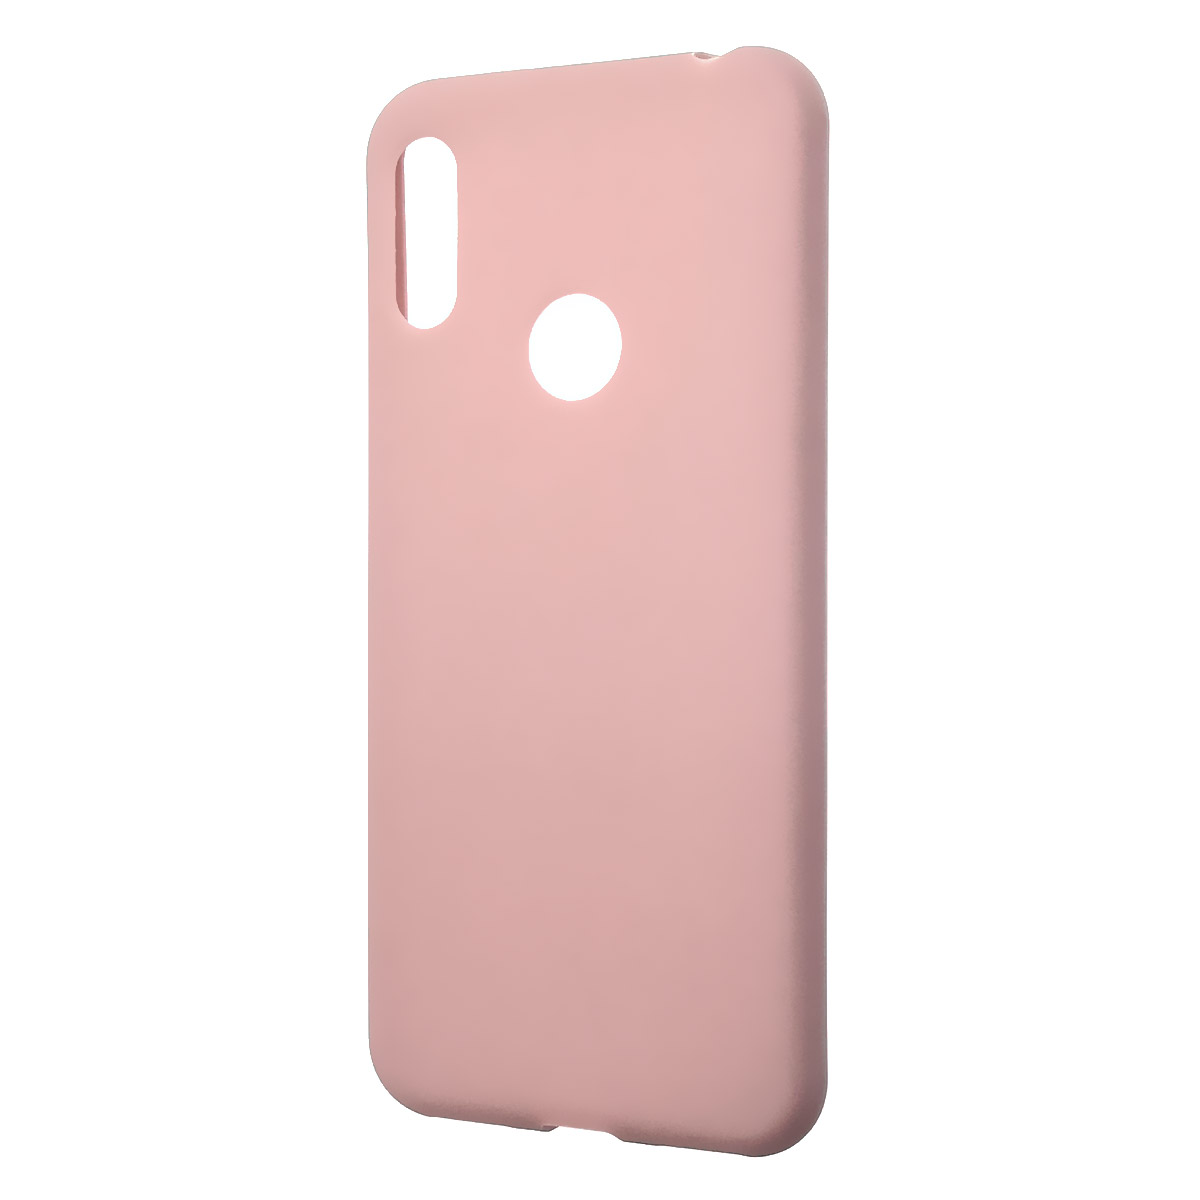 Чехол накладка GPS для HUAWEI Honor 8A, Y6 2019, силикон, матовый, цвет бледно розовый